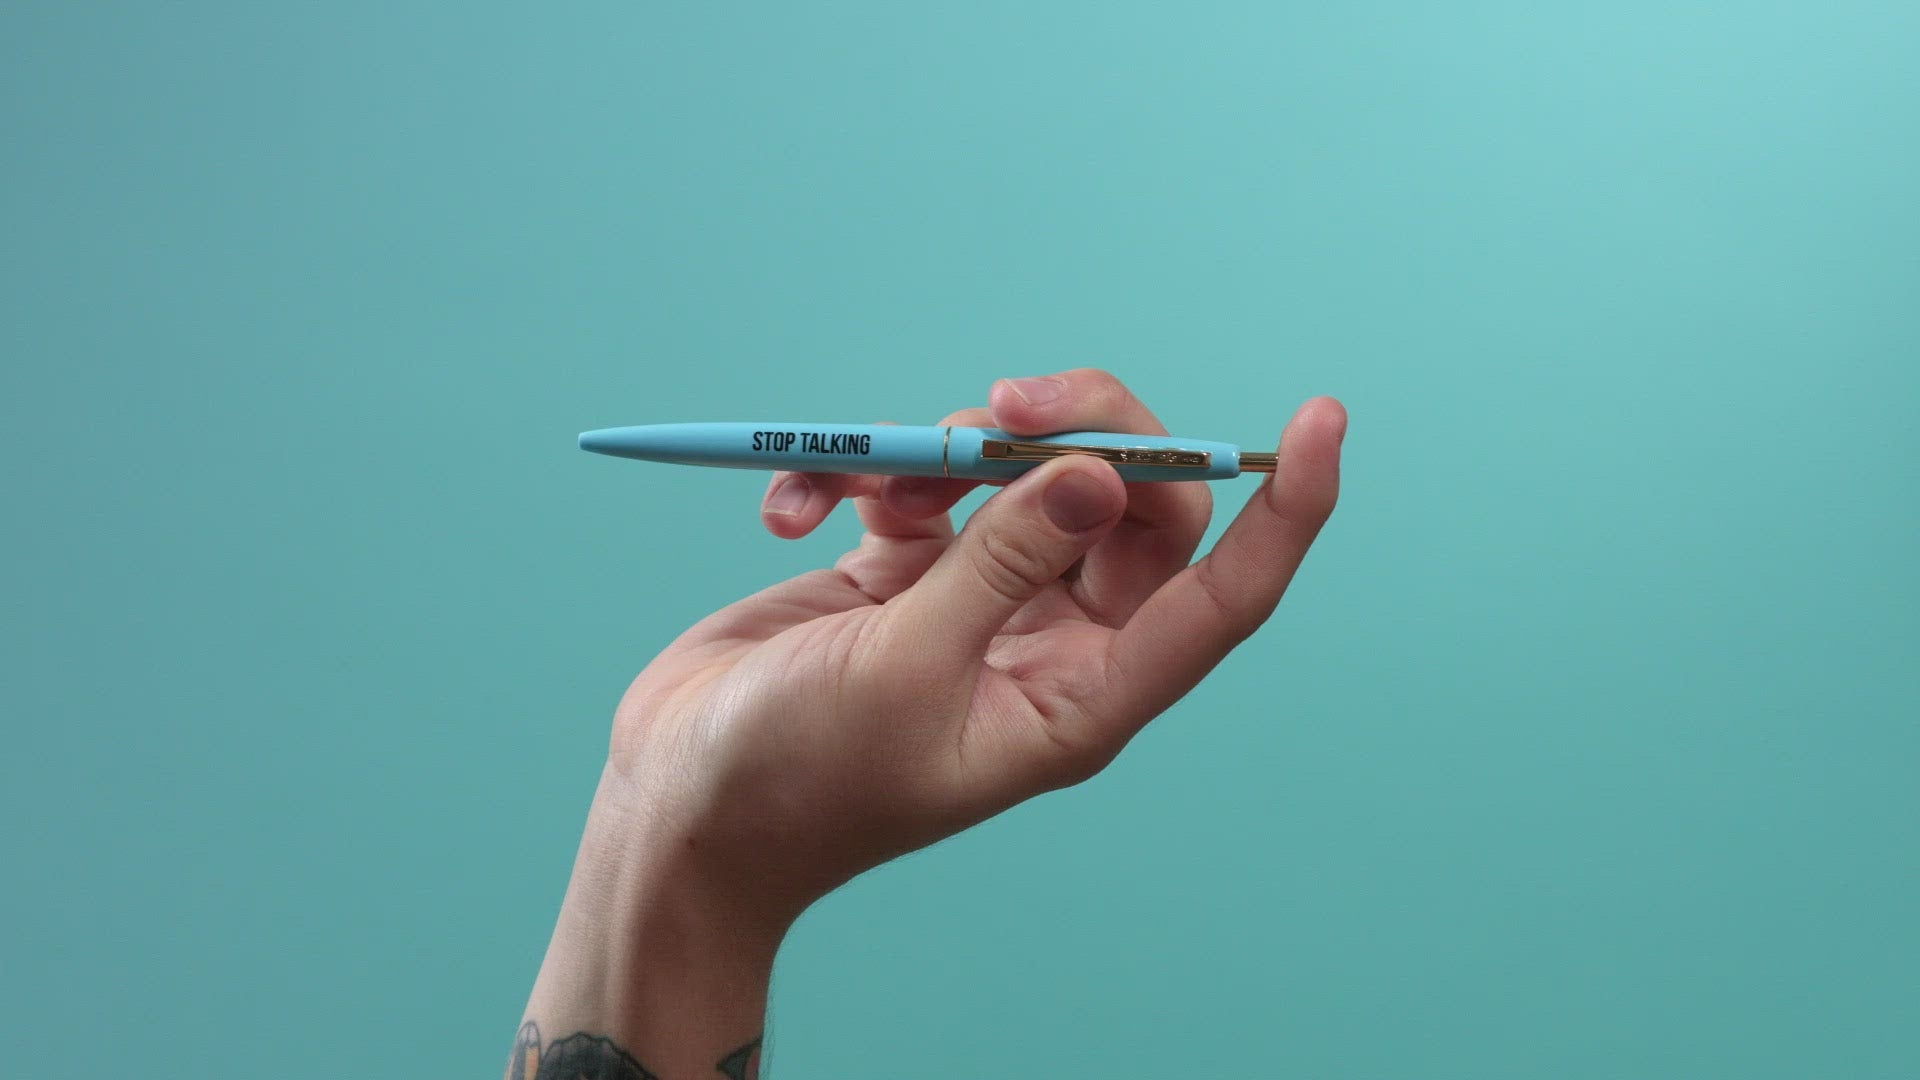 Mesmos Fancy Pen Set Office Motivational Pens Boss Lady Writing Pens